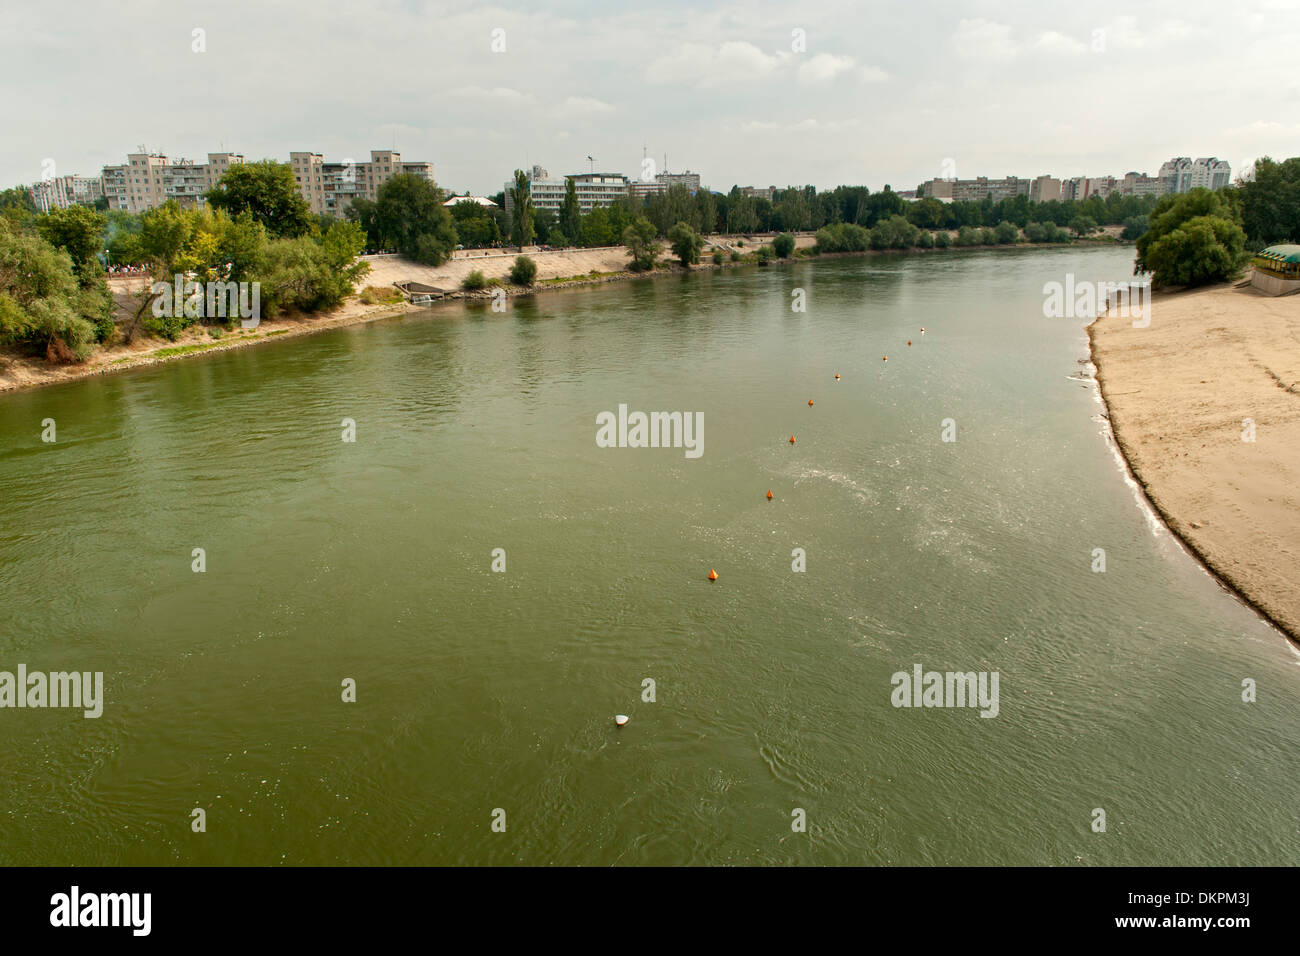 The Dniester River in Tiraspol, the capital of Transnistria. Stock Photo